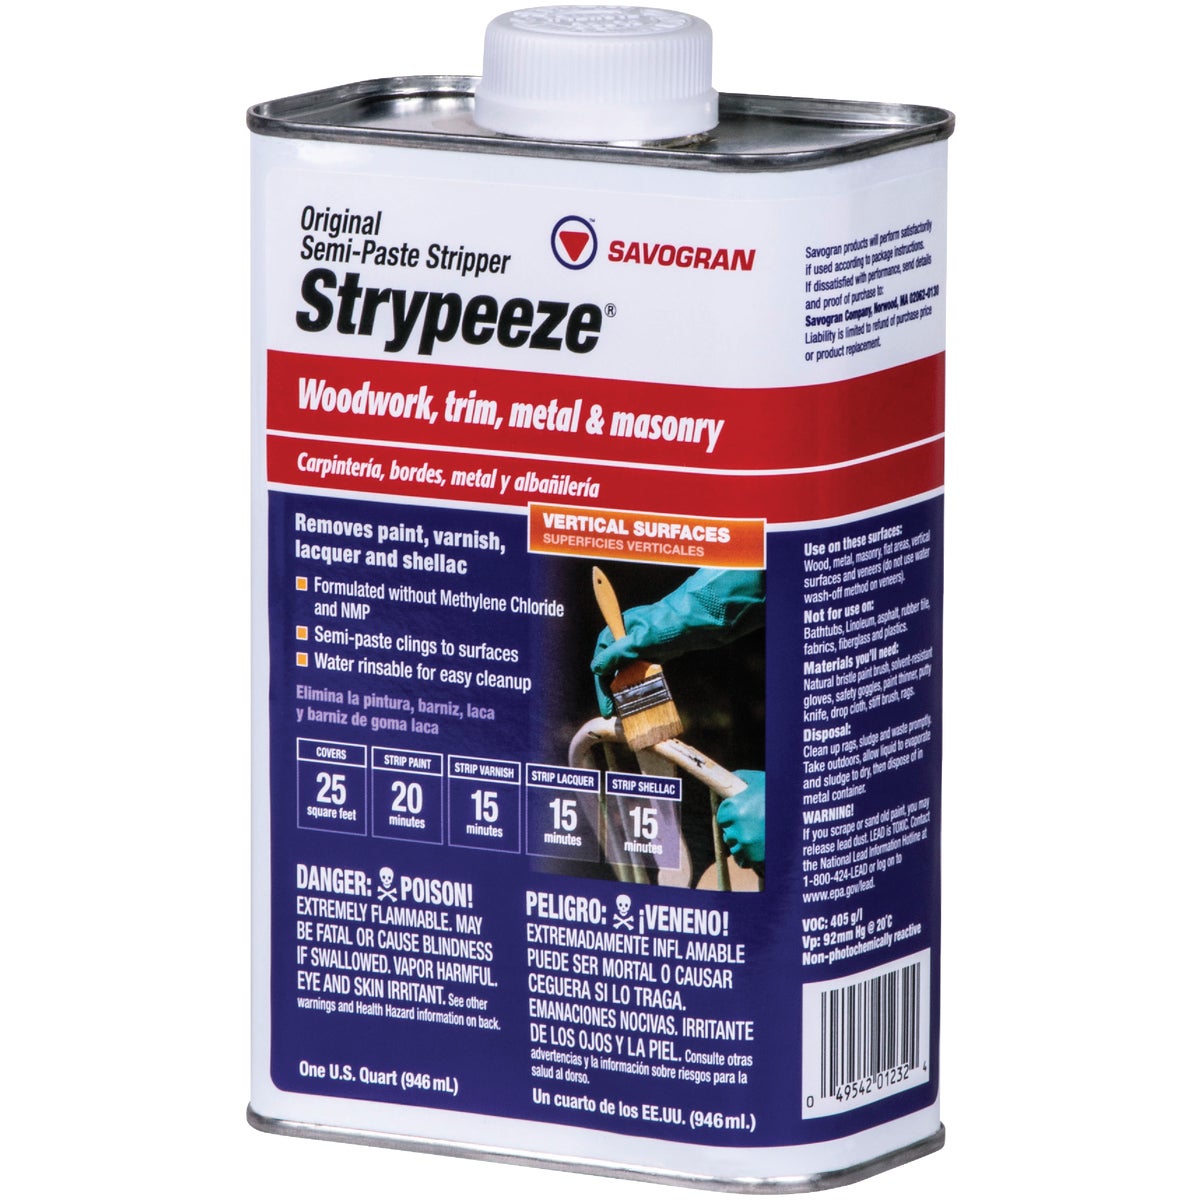 Item 775398, General-purpose methylene chloride free stripper removes paint, varnish and